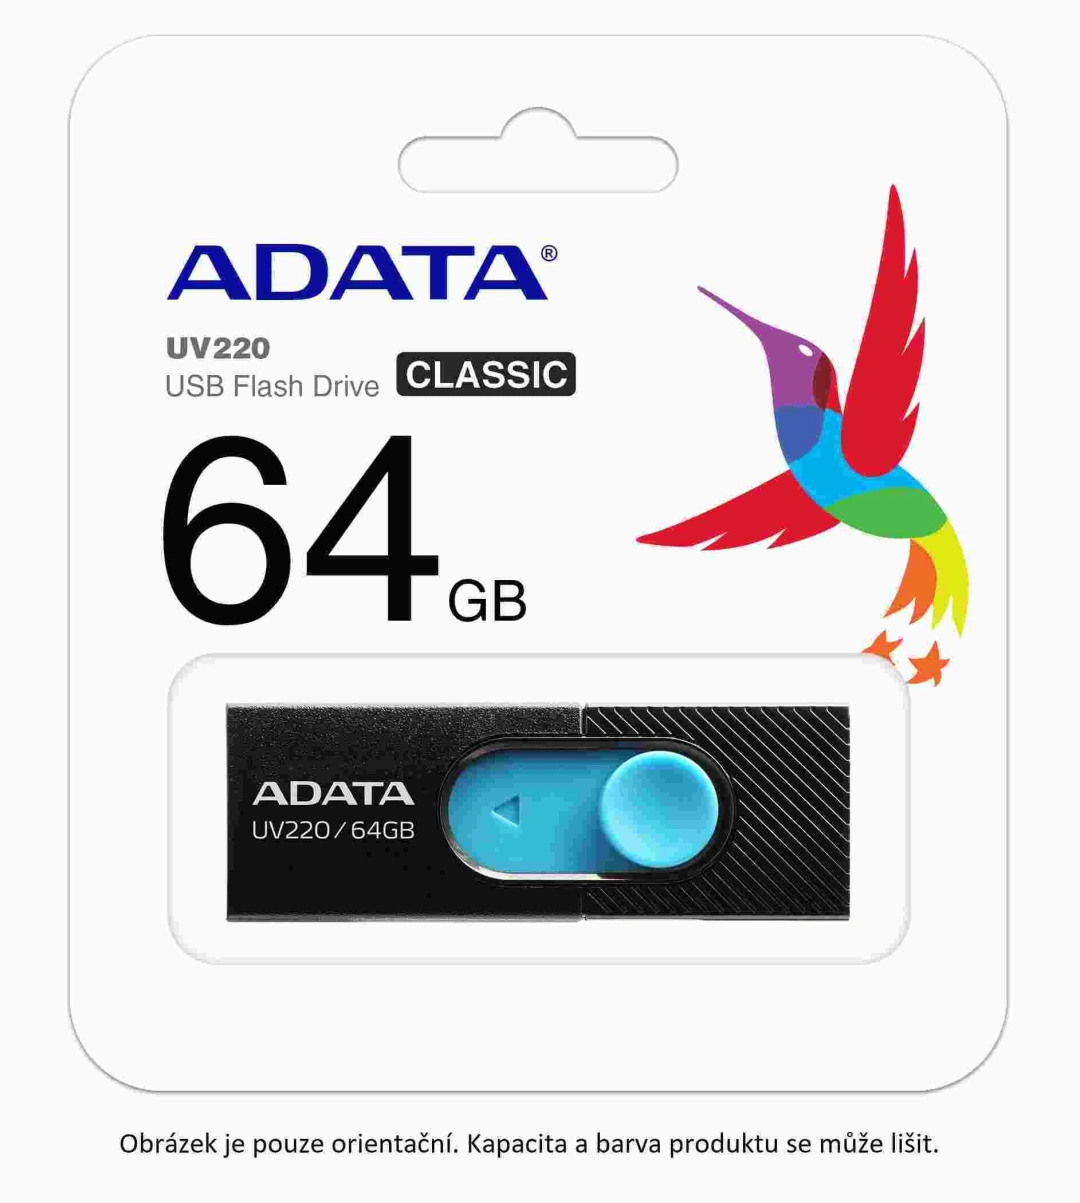 ADATA Flash Disk 32GB USB 2.0 Black/Blue